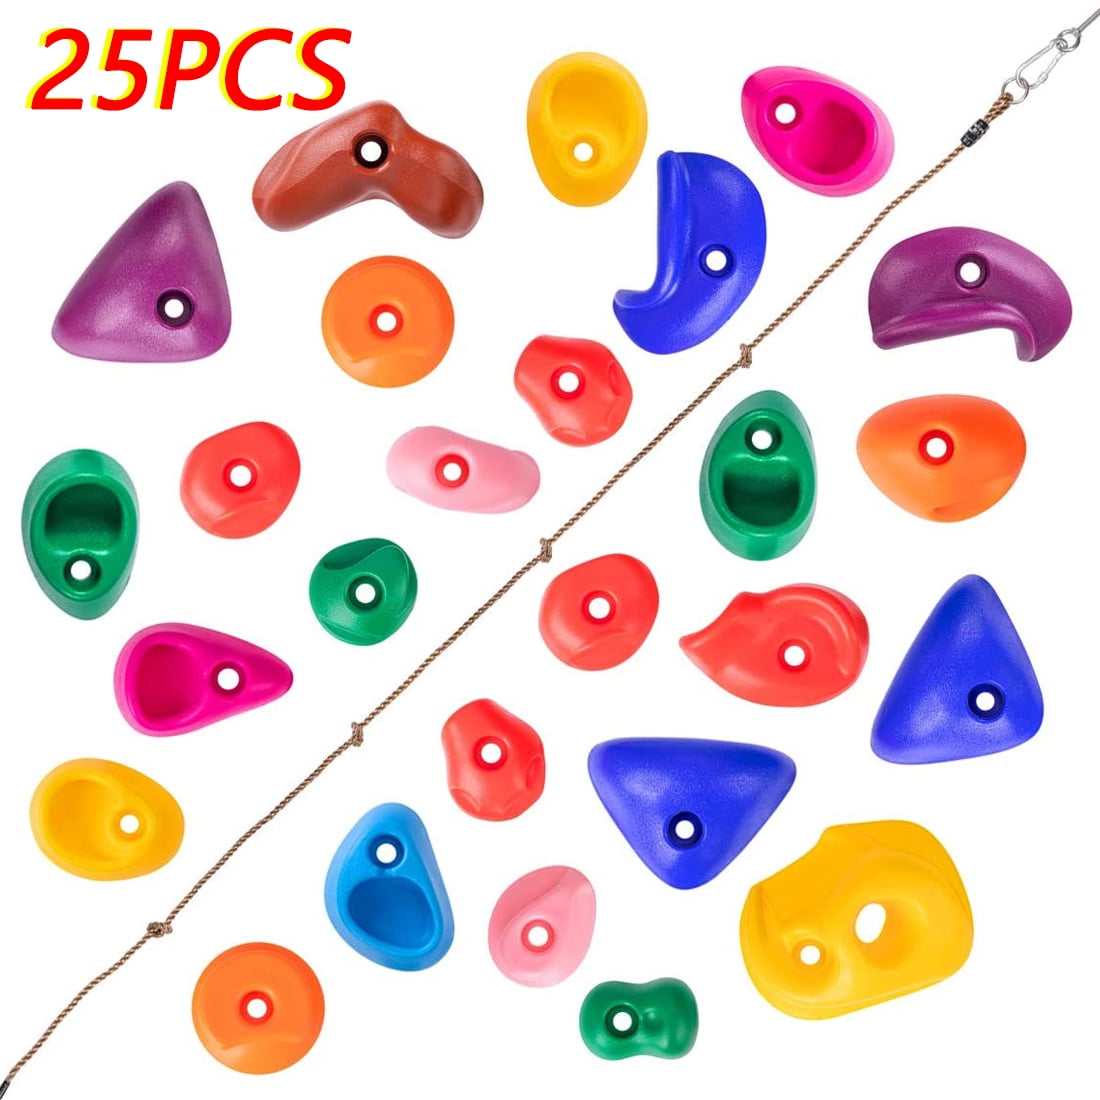 Sets of 25 Multi-Colored Kids&Adults Large Rock Climbing Holds Climbing Rocks 